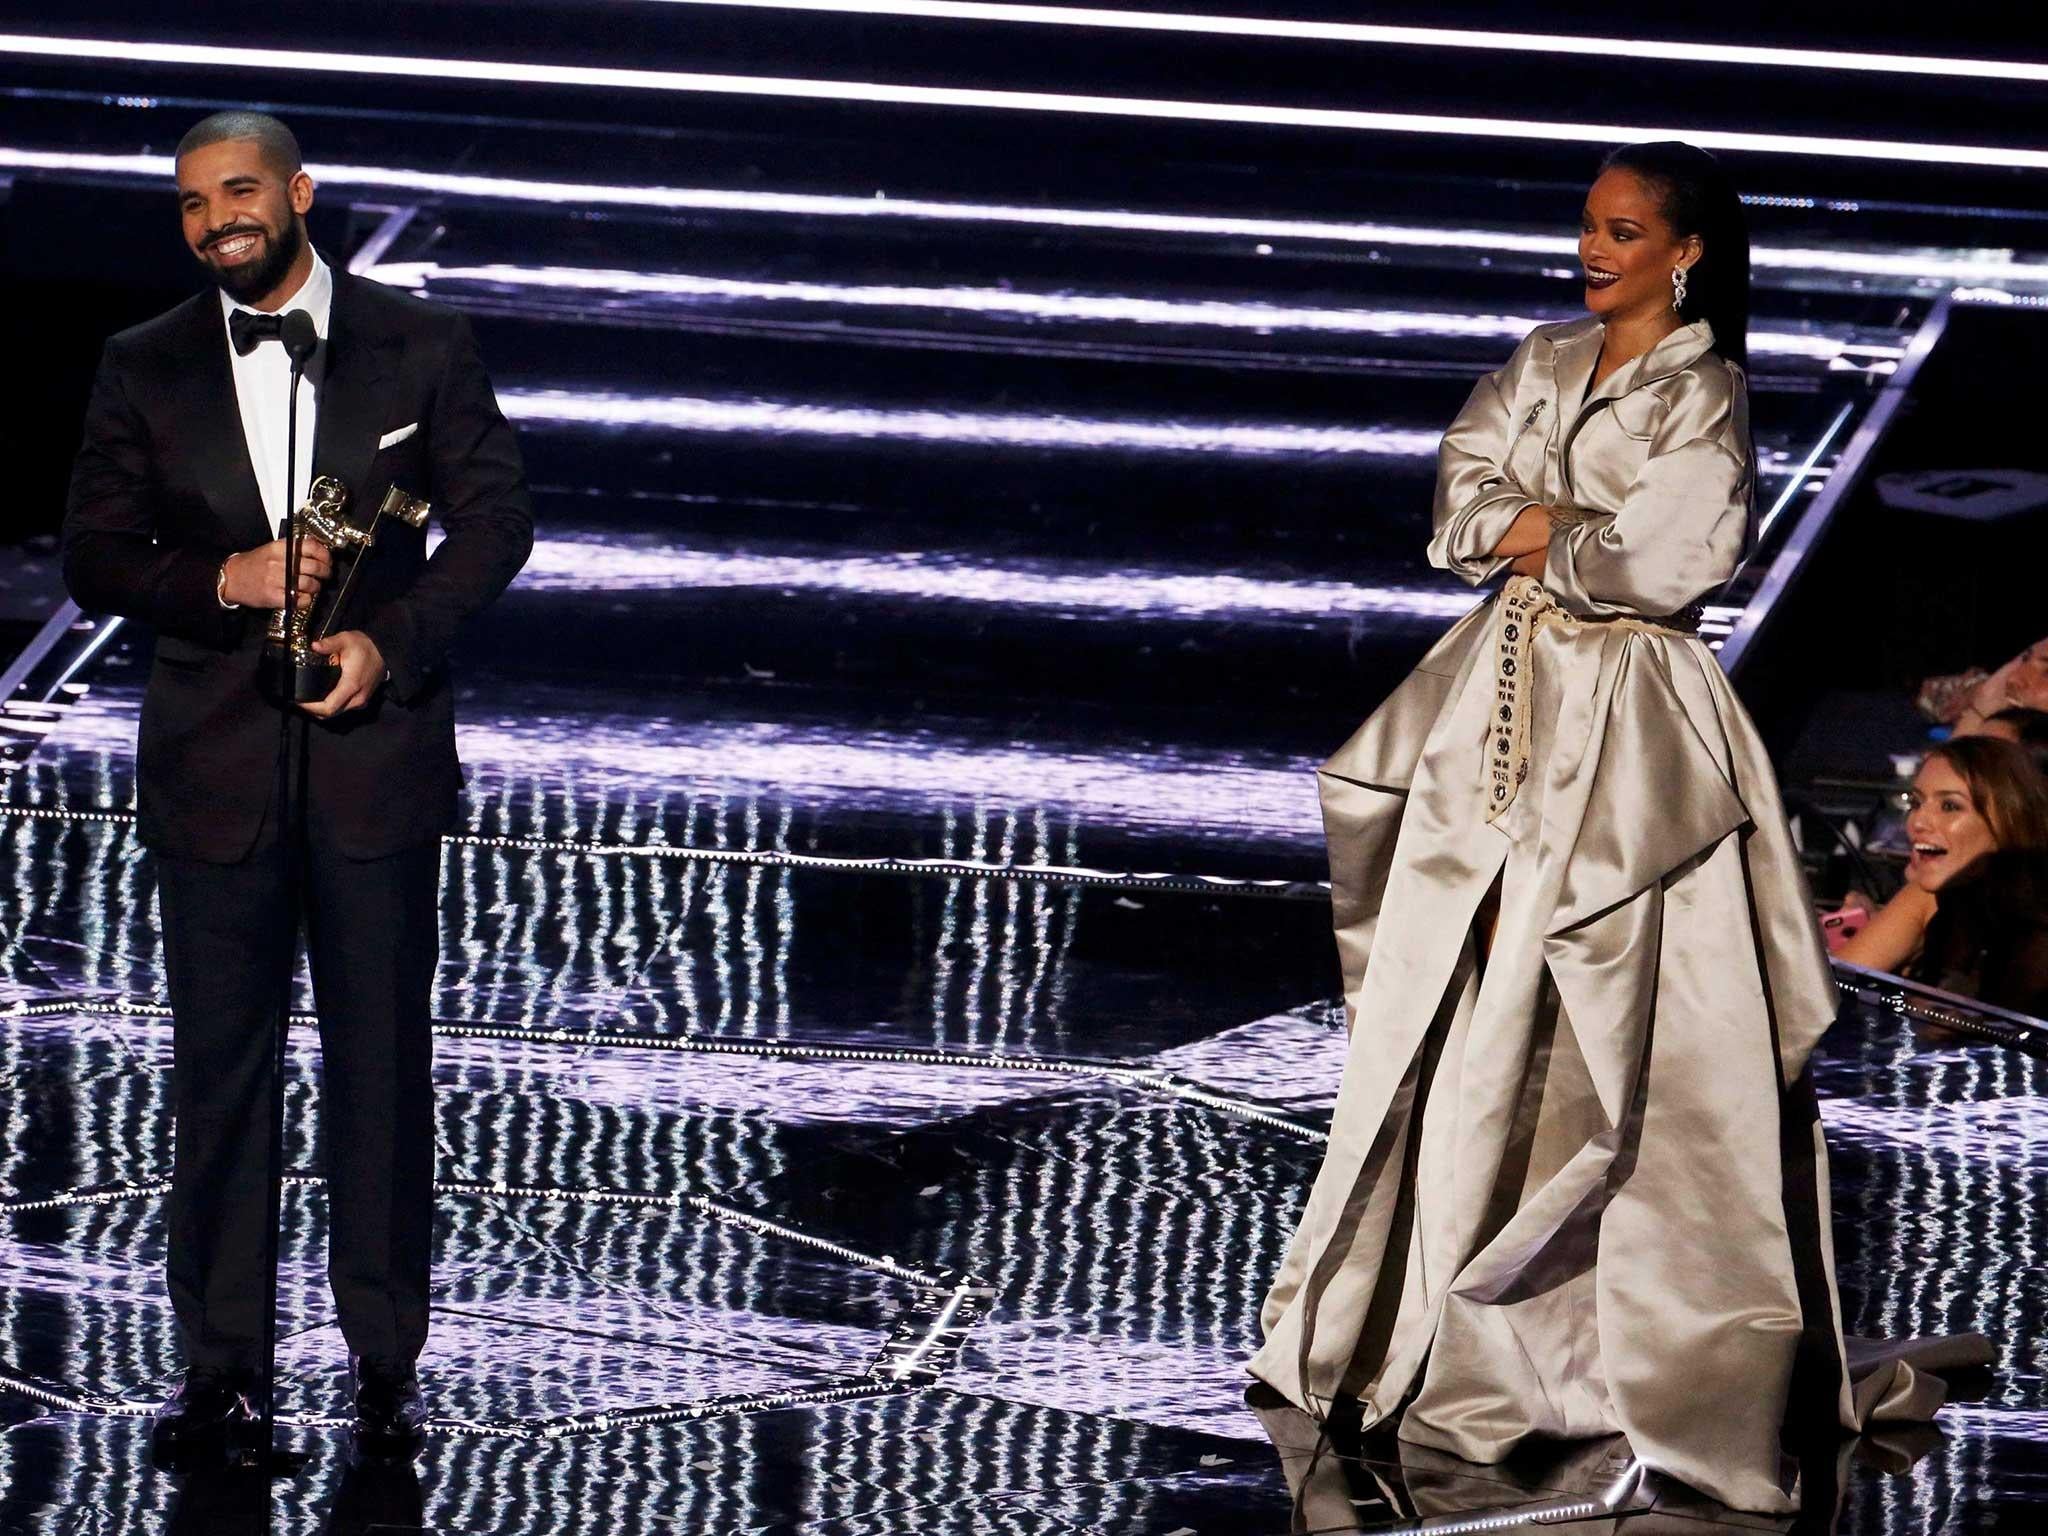 Drake presents Rihanna with the Michael Jackson Video Vanguard Award during the 2016 MTV Video Music Awards